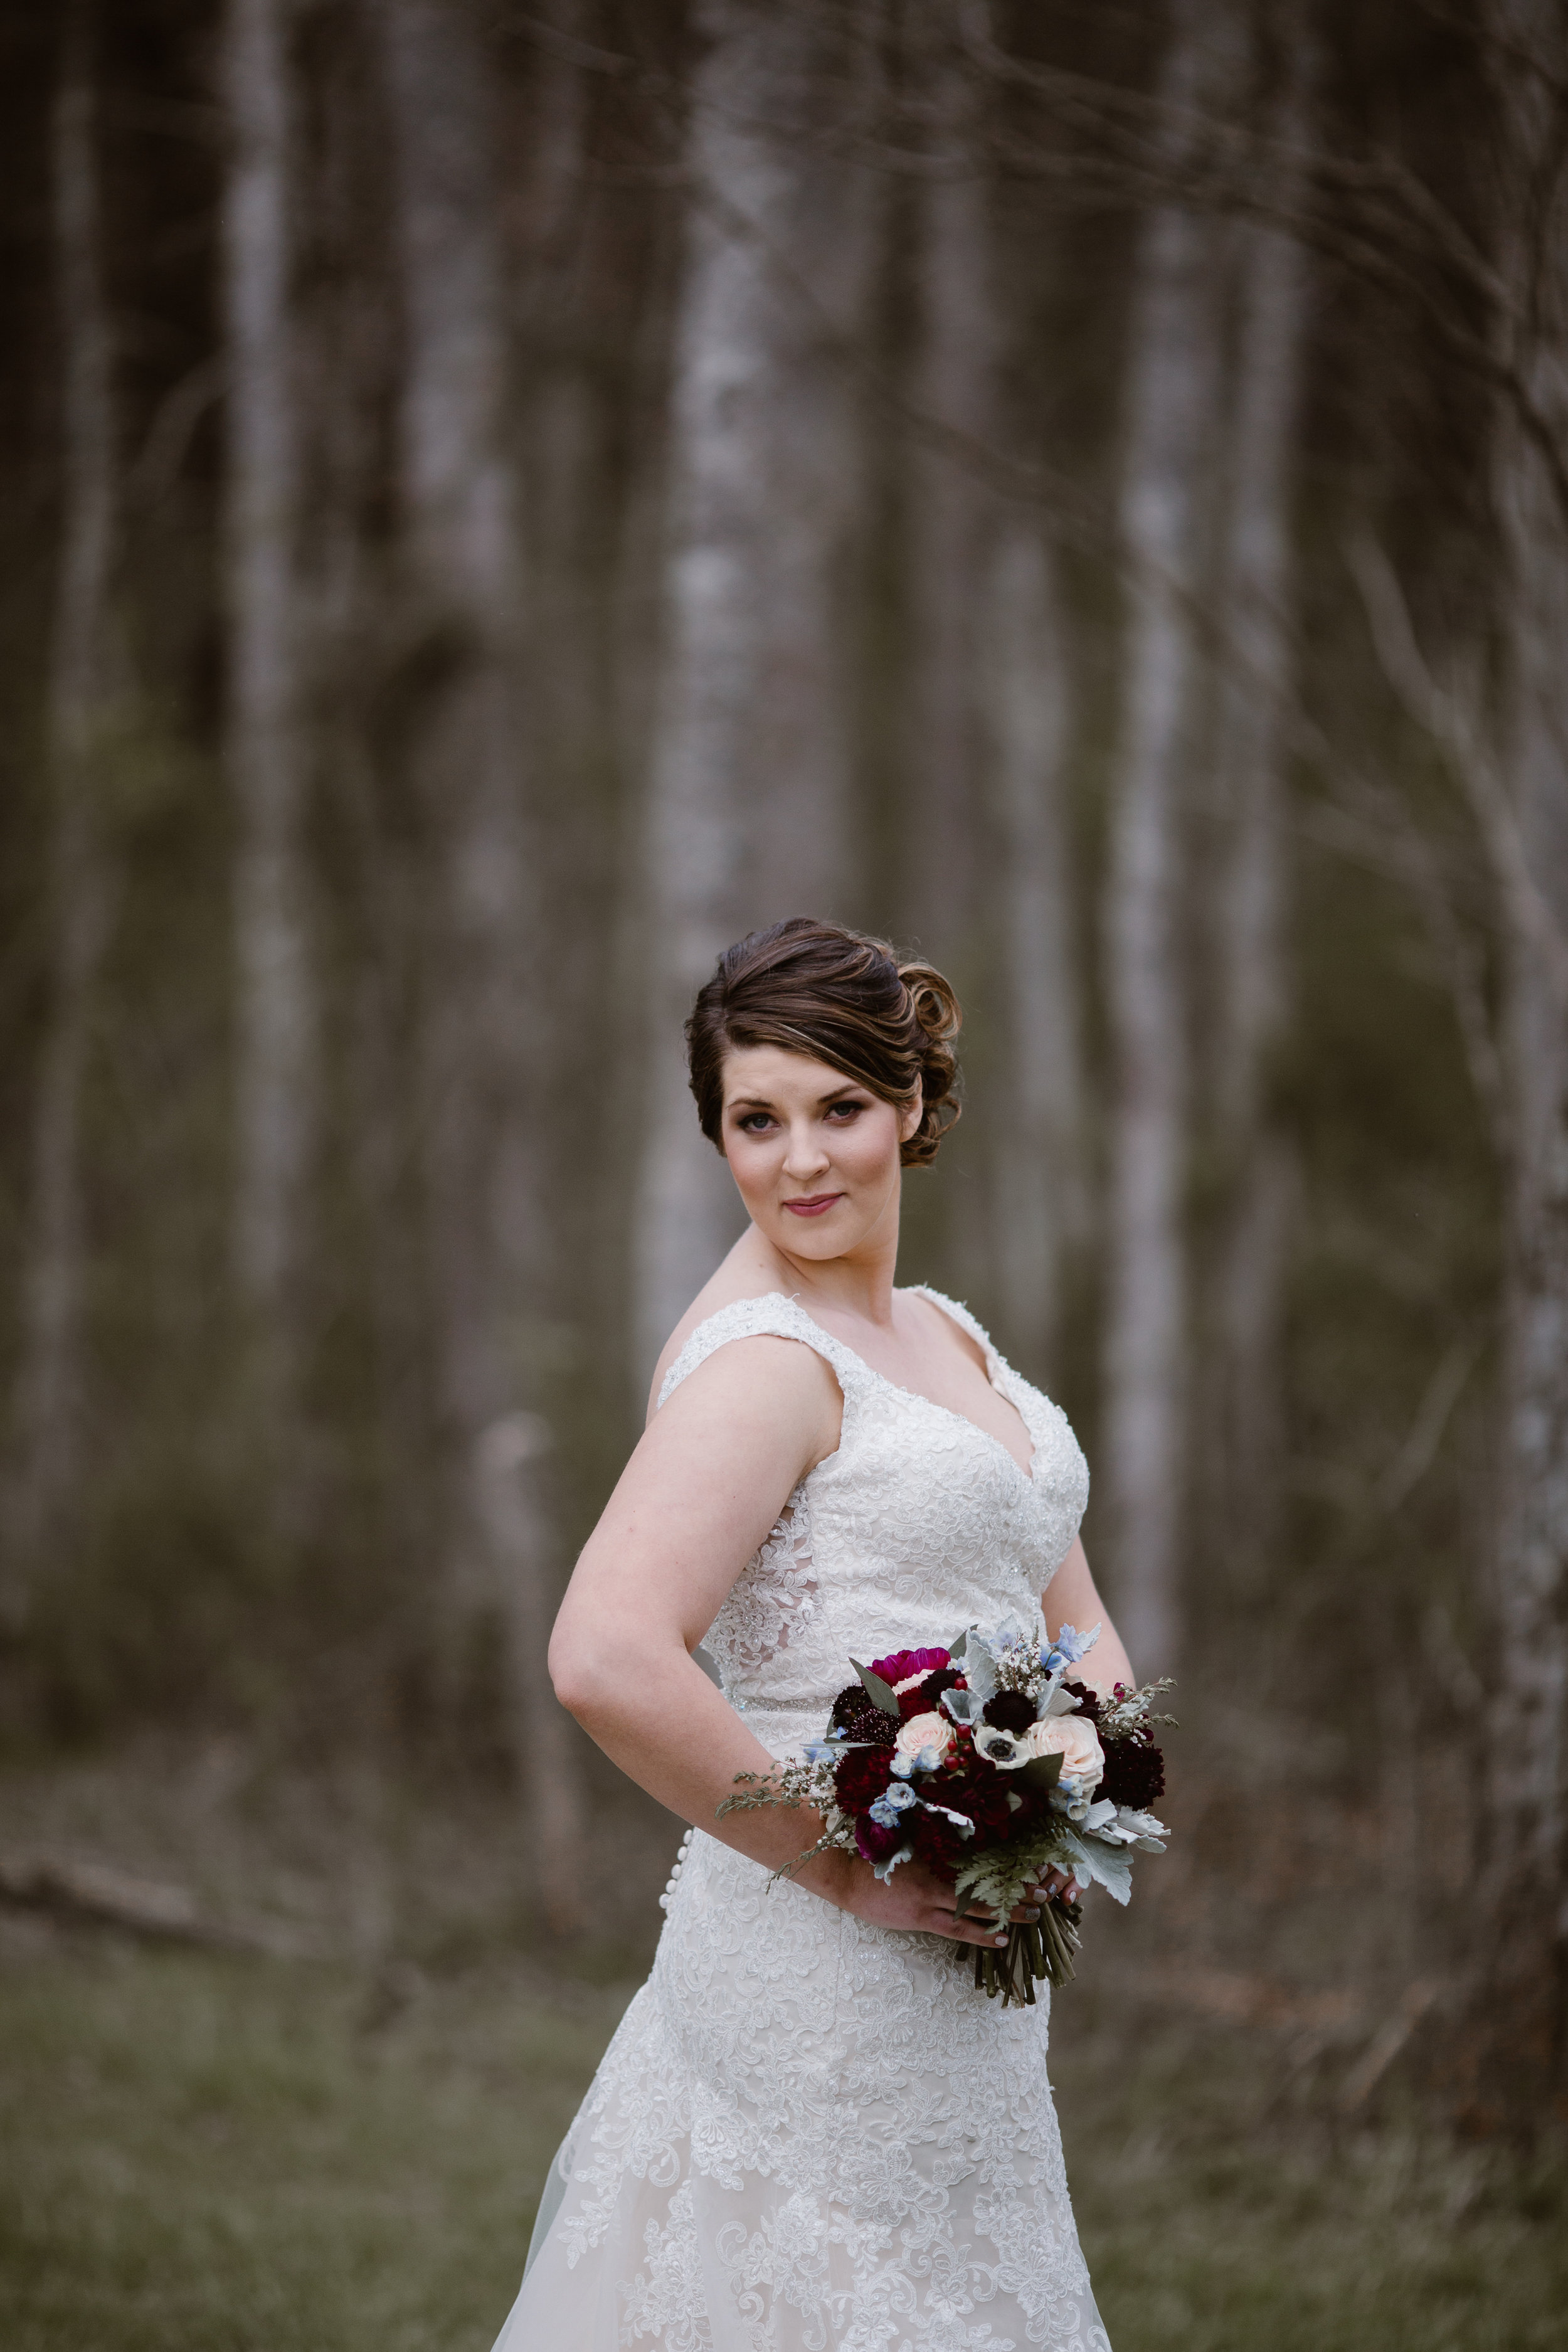 Maroon Fall Wedding Bouquet - A Burgundy + Bronze Ramble Creek Fall Wedding - Erin Morrison Photography